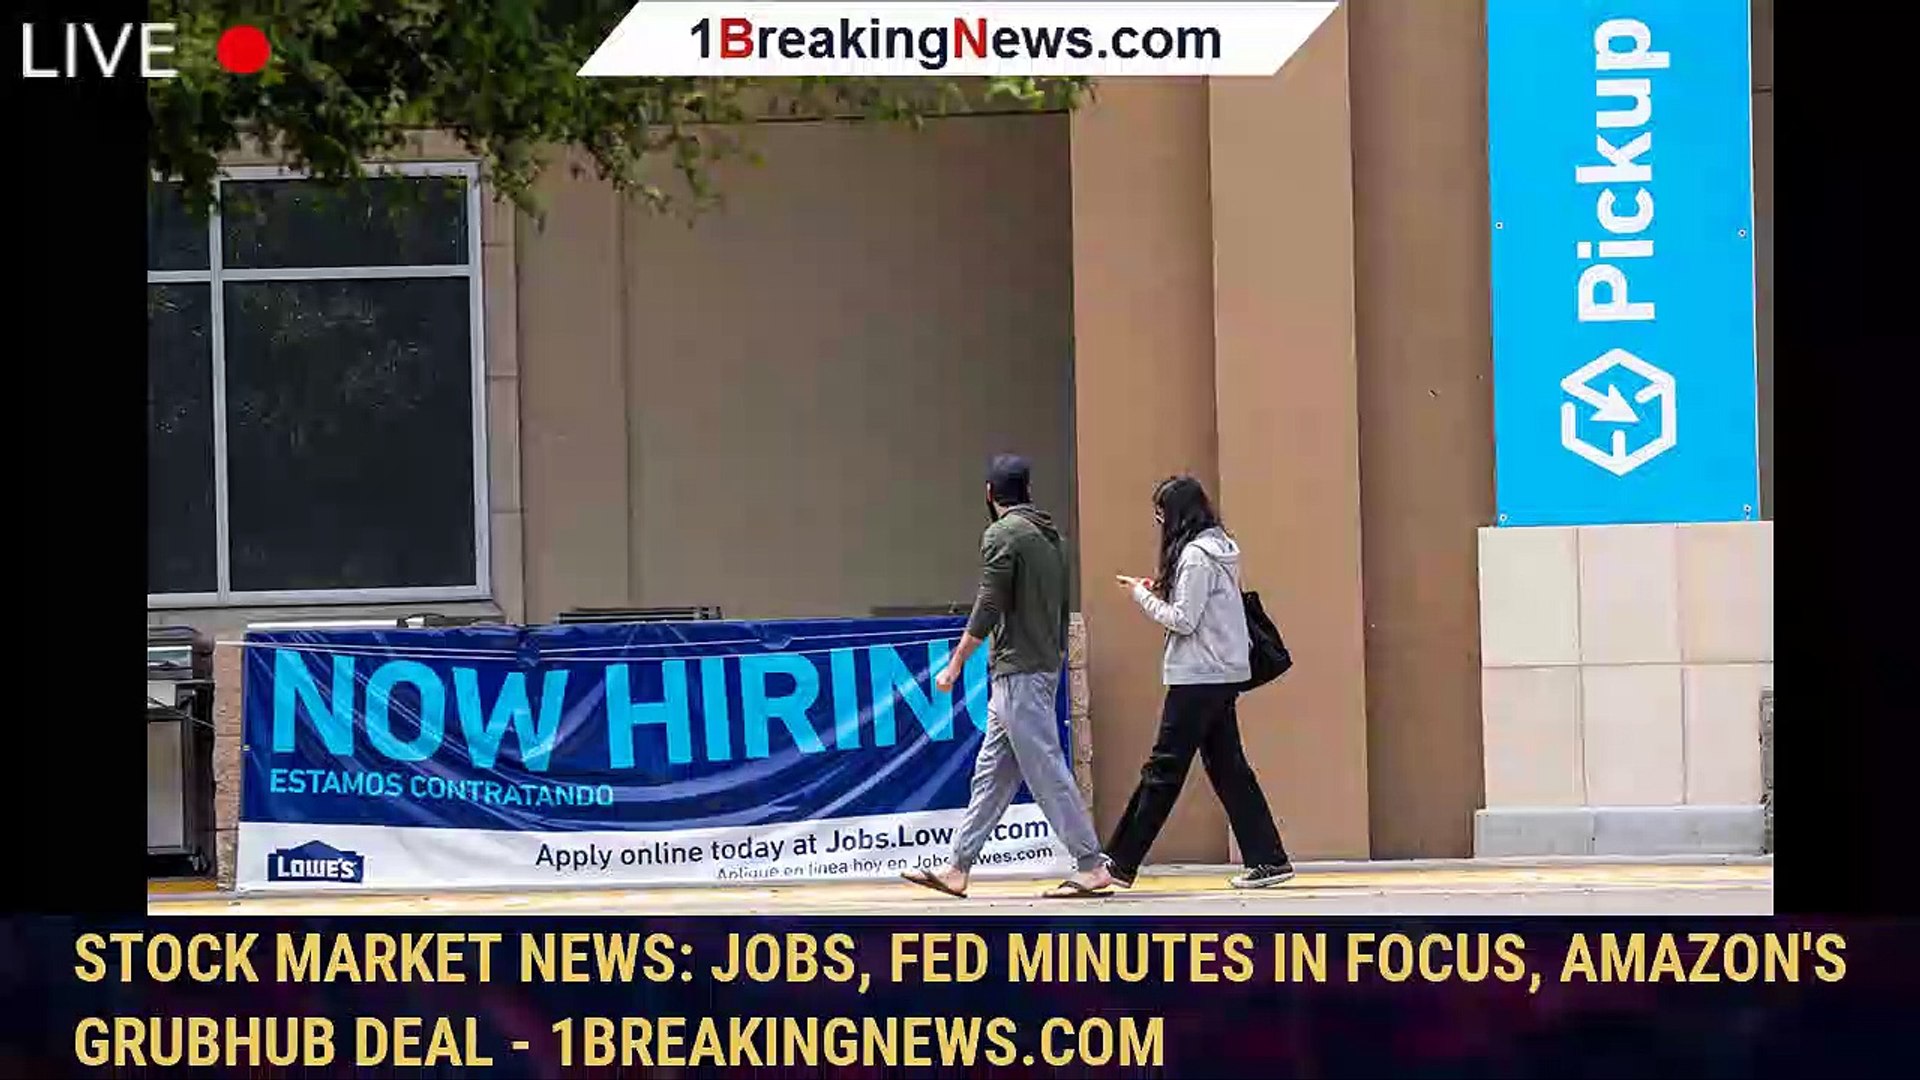 STOCK MARKET NEWS: Jobs, Fed minutes in focus, Amazon's Grubhub deal - 1breakingnews.com